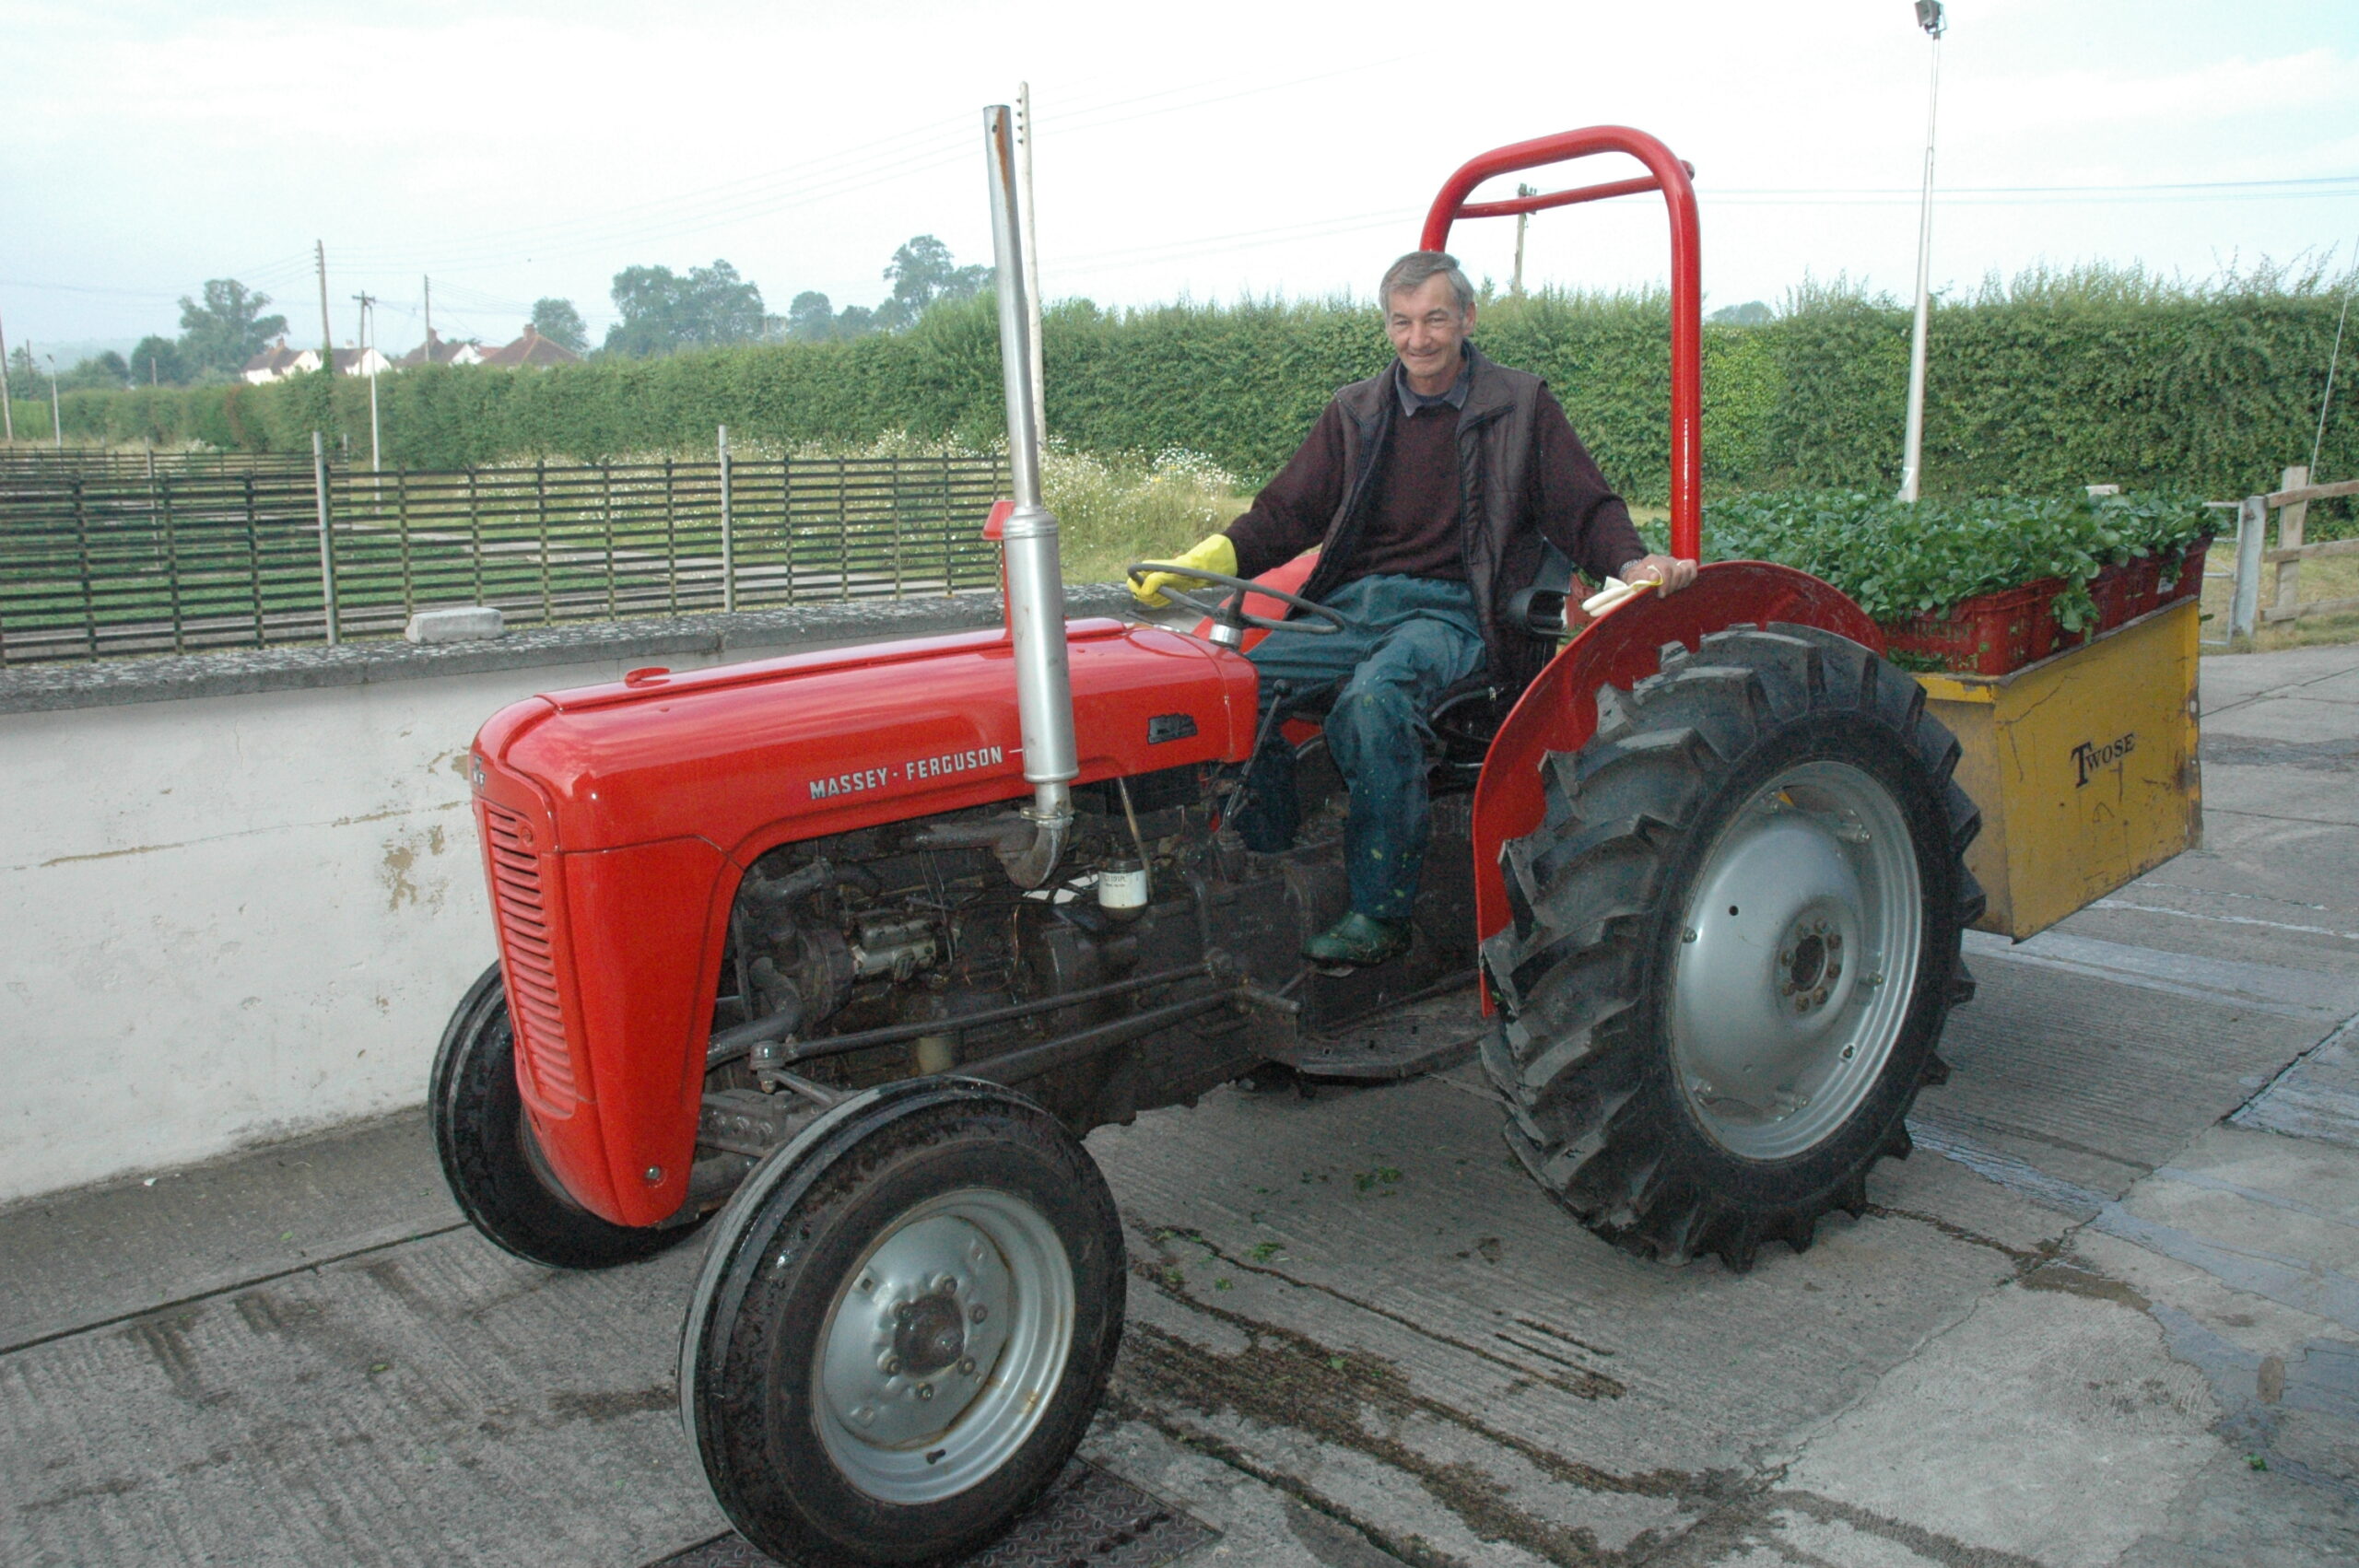 Clive Martin Tractor